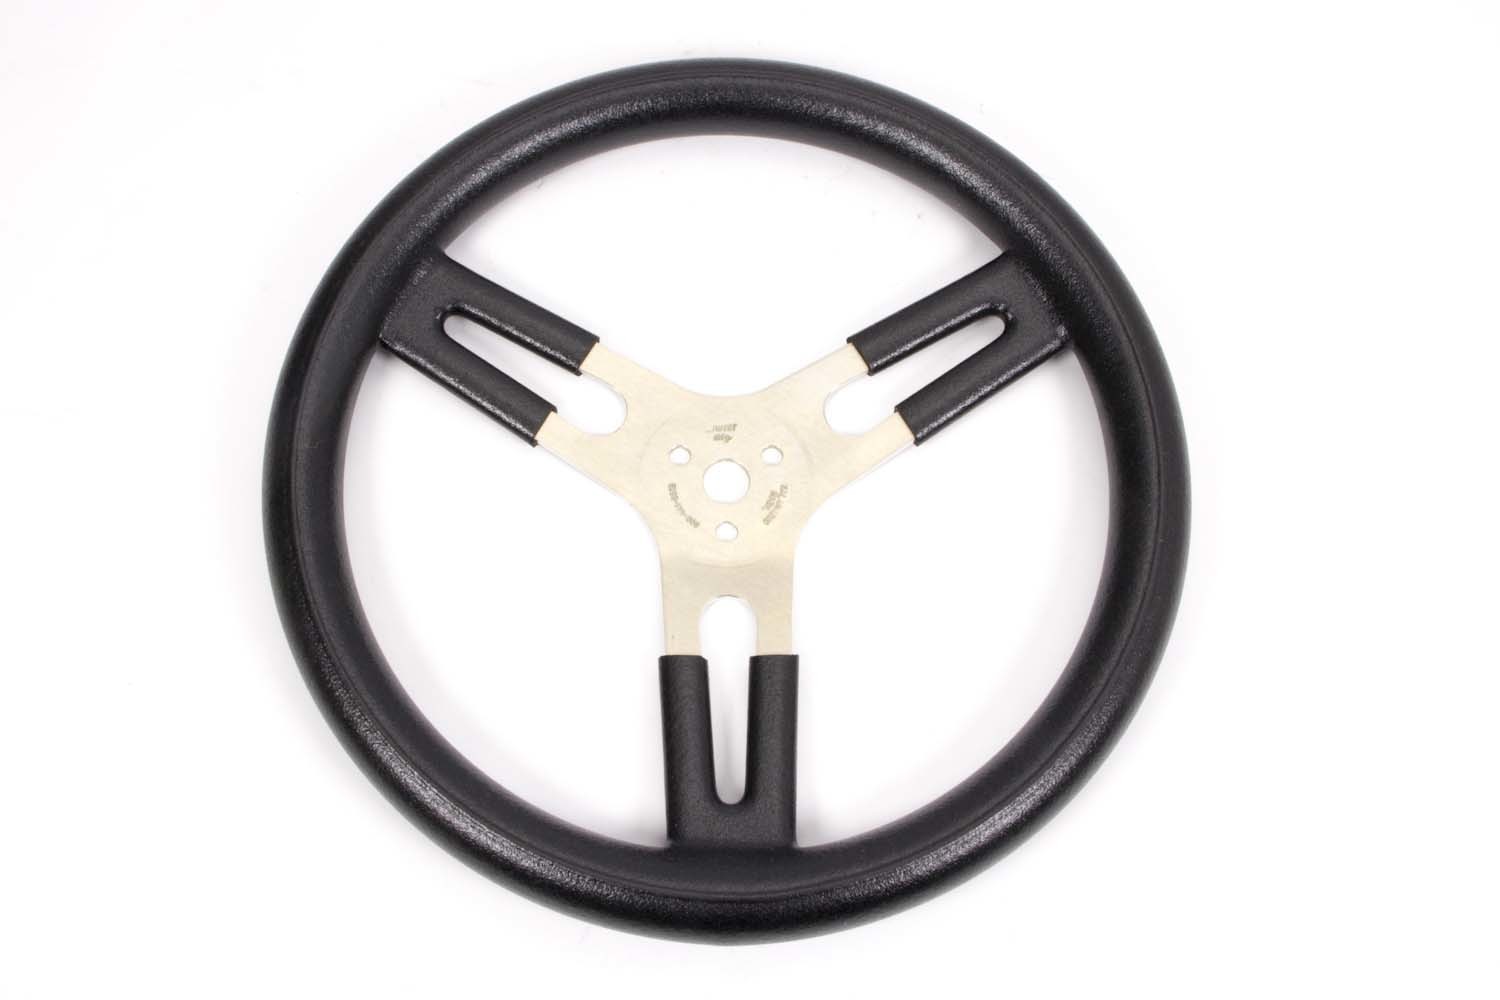 Sweet Manufacturing 601-80151 Steering Wheel, 15 in Diameter, Flat, 3-Spoke, Black Rubberized Grip, Aluminum, Natural, Each